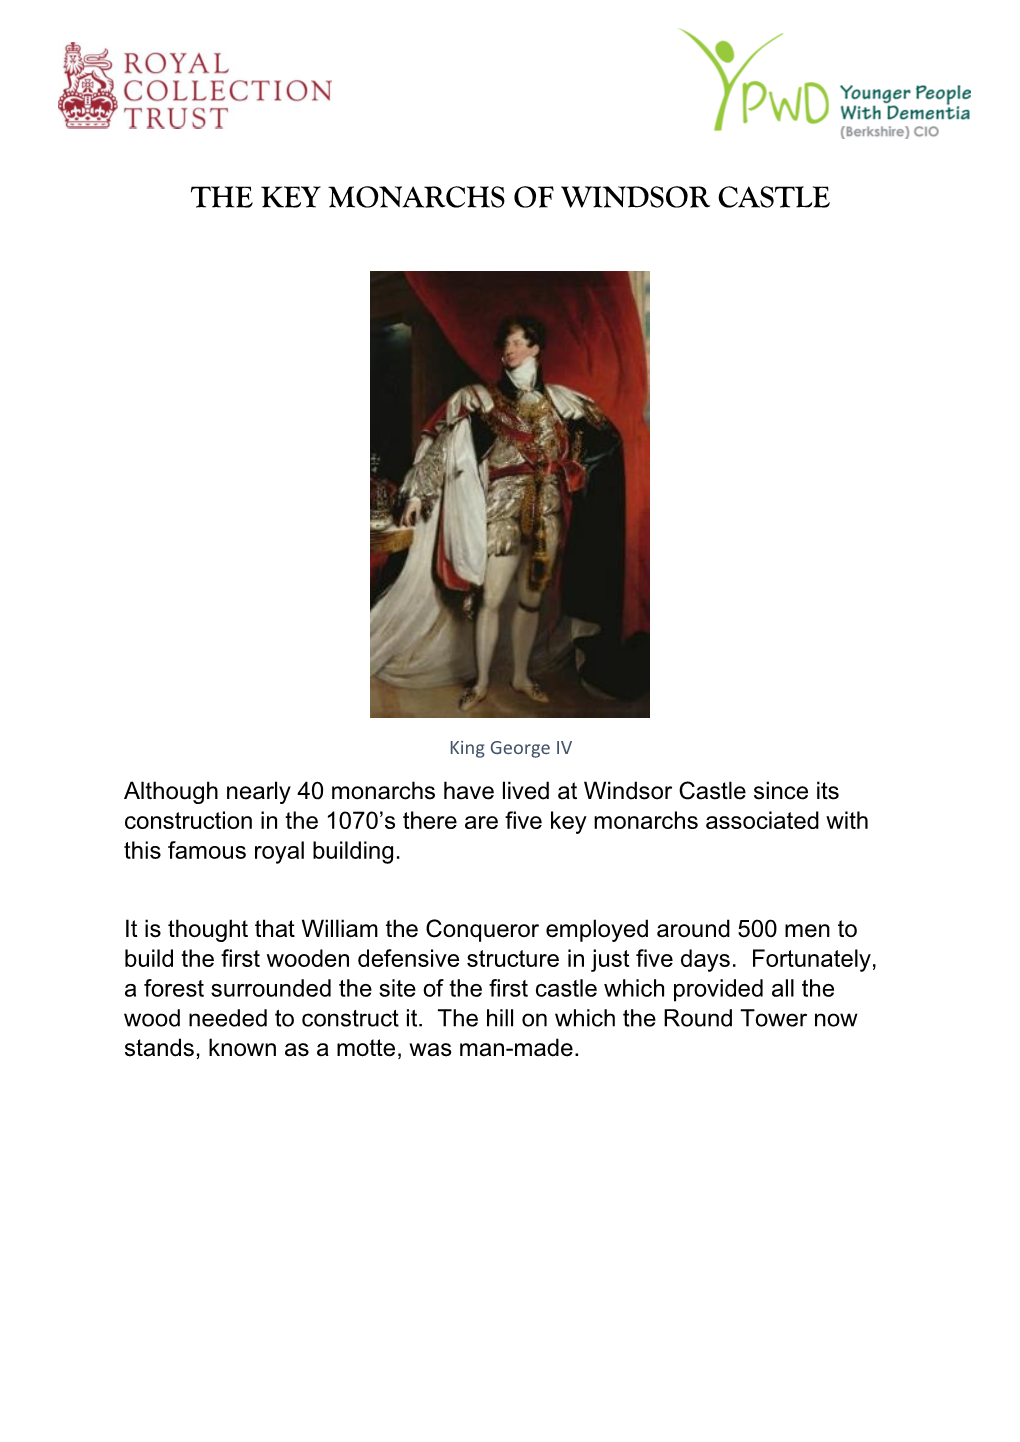 The Key Monarchs of Windsor Castle